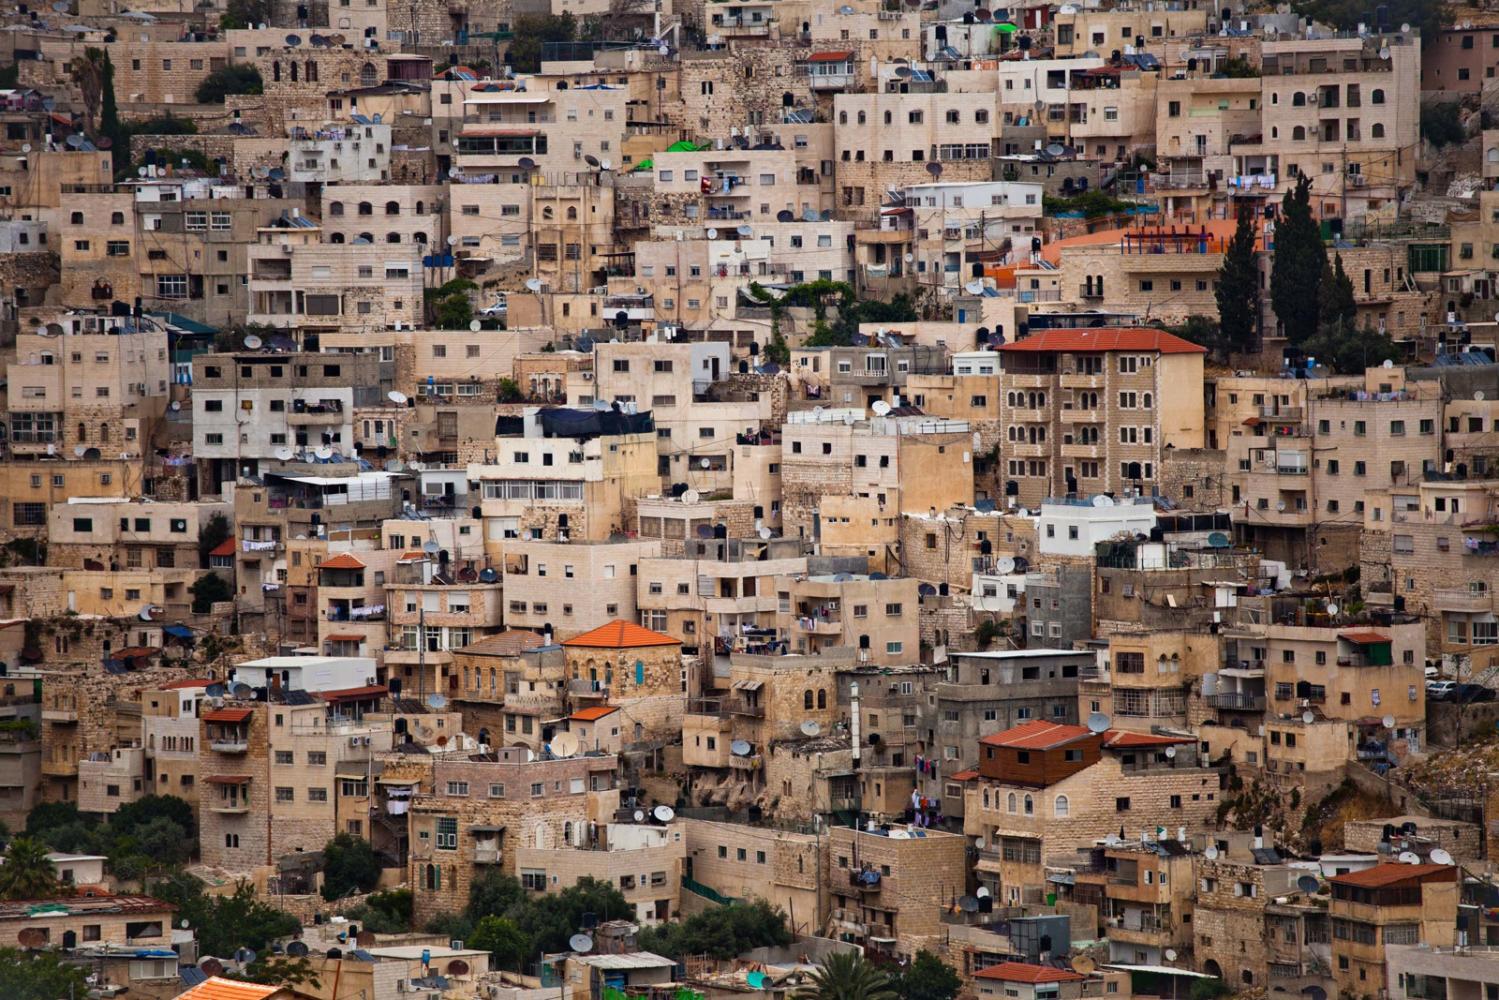 Singles - West Bank, Palestine